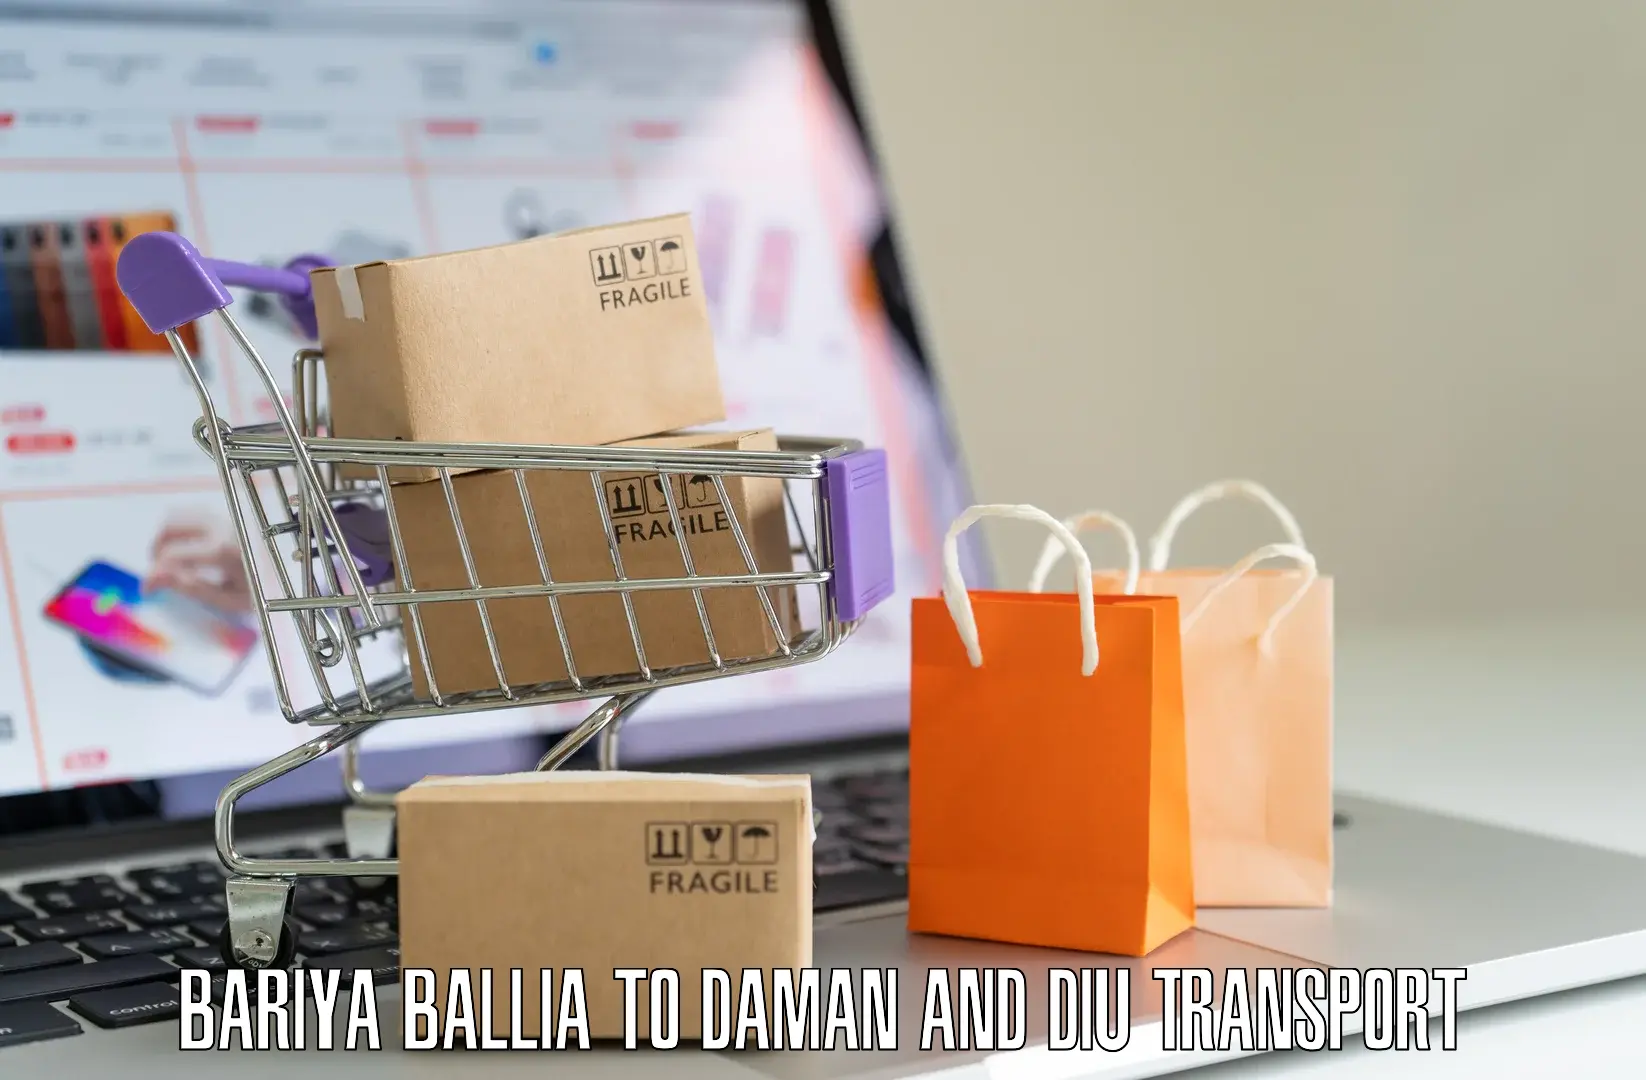 Sending bike to another city Bariya Ballia to Daman and Diu